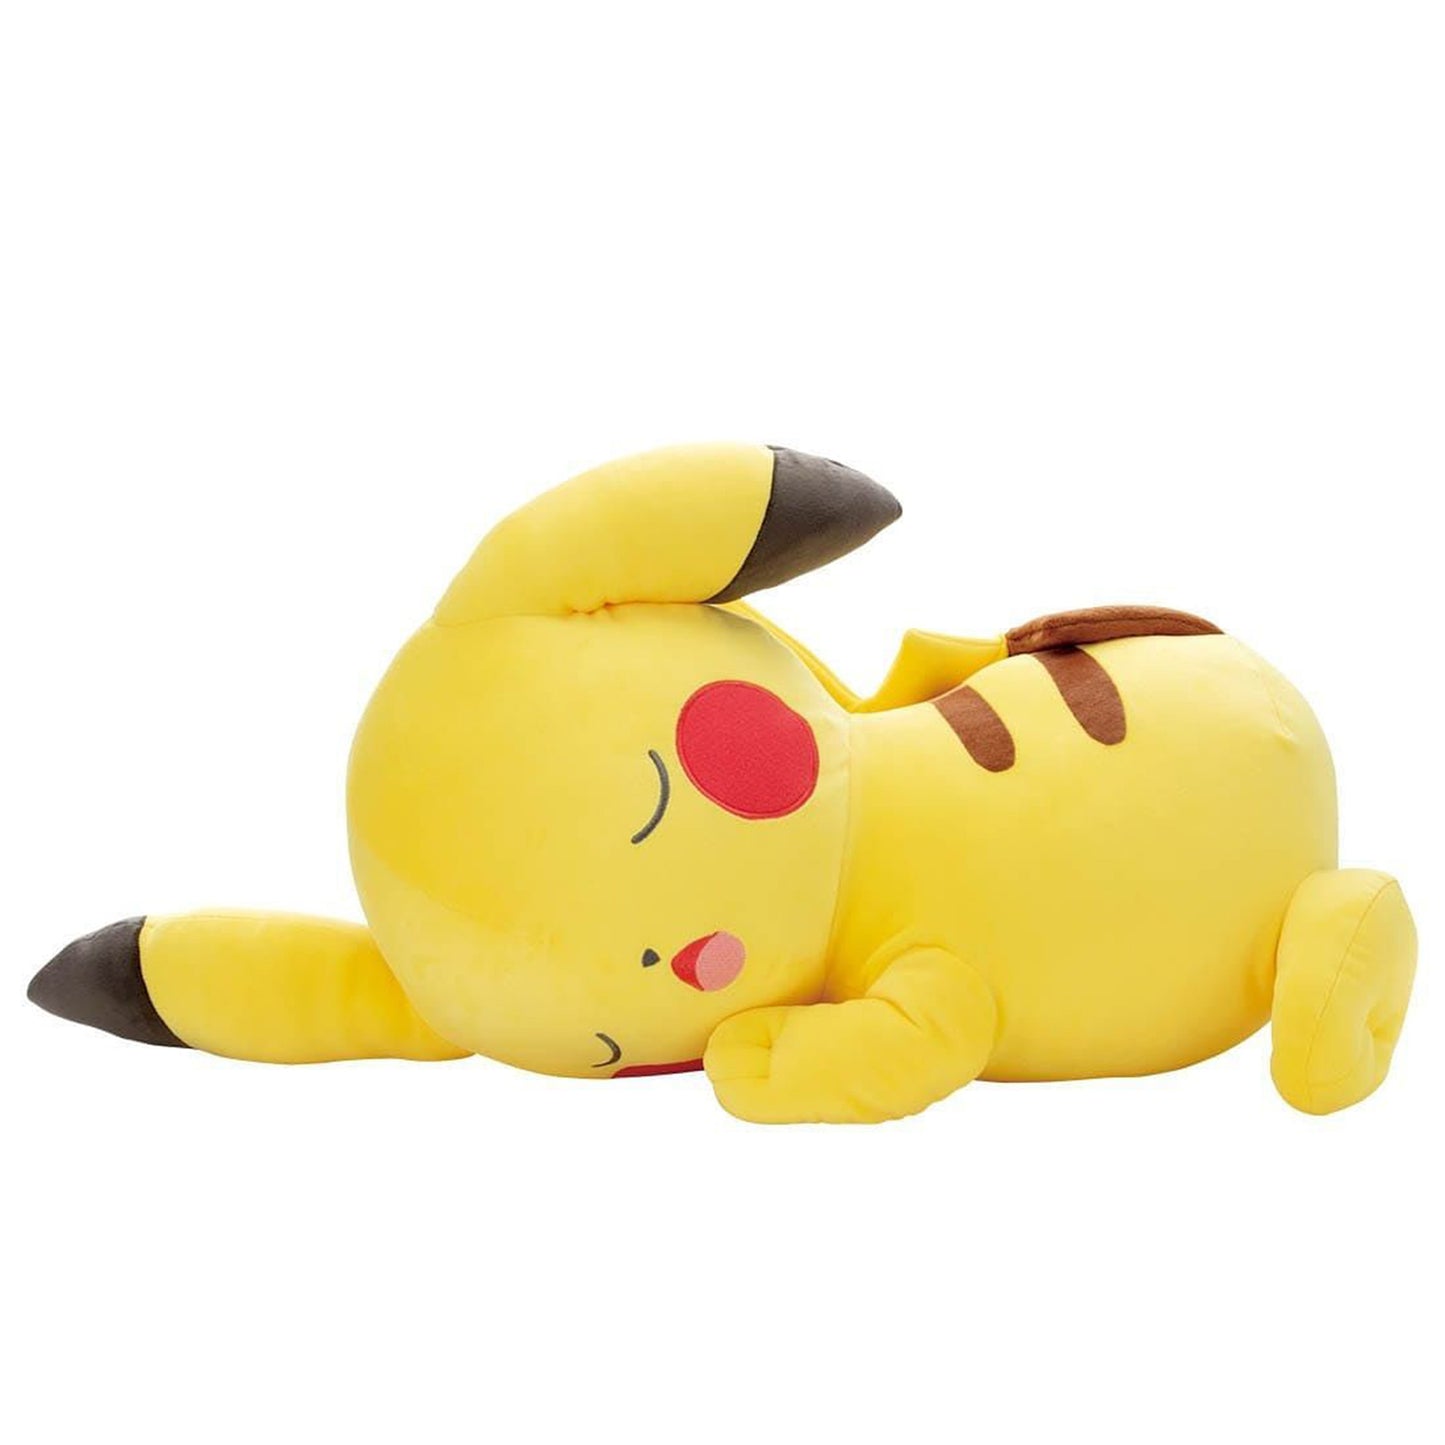 Suyasuya Friend Relax at Home Series Large Pikachu Pokémon Plush